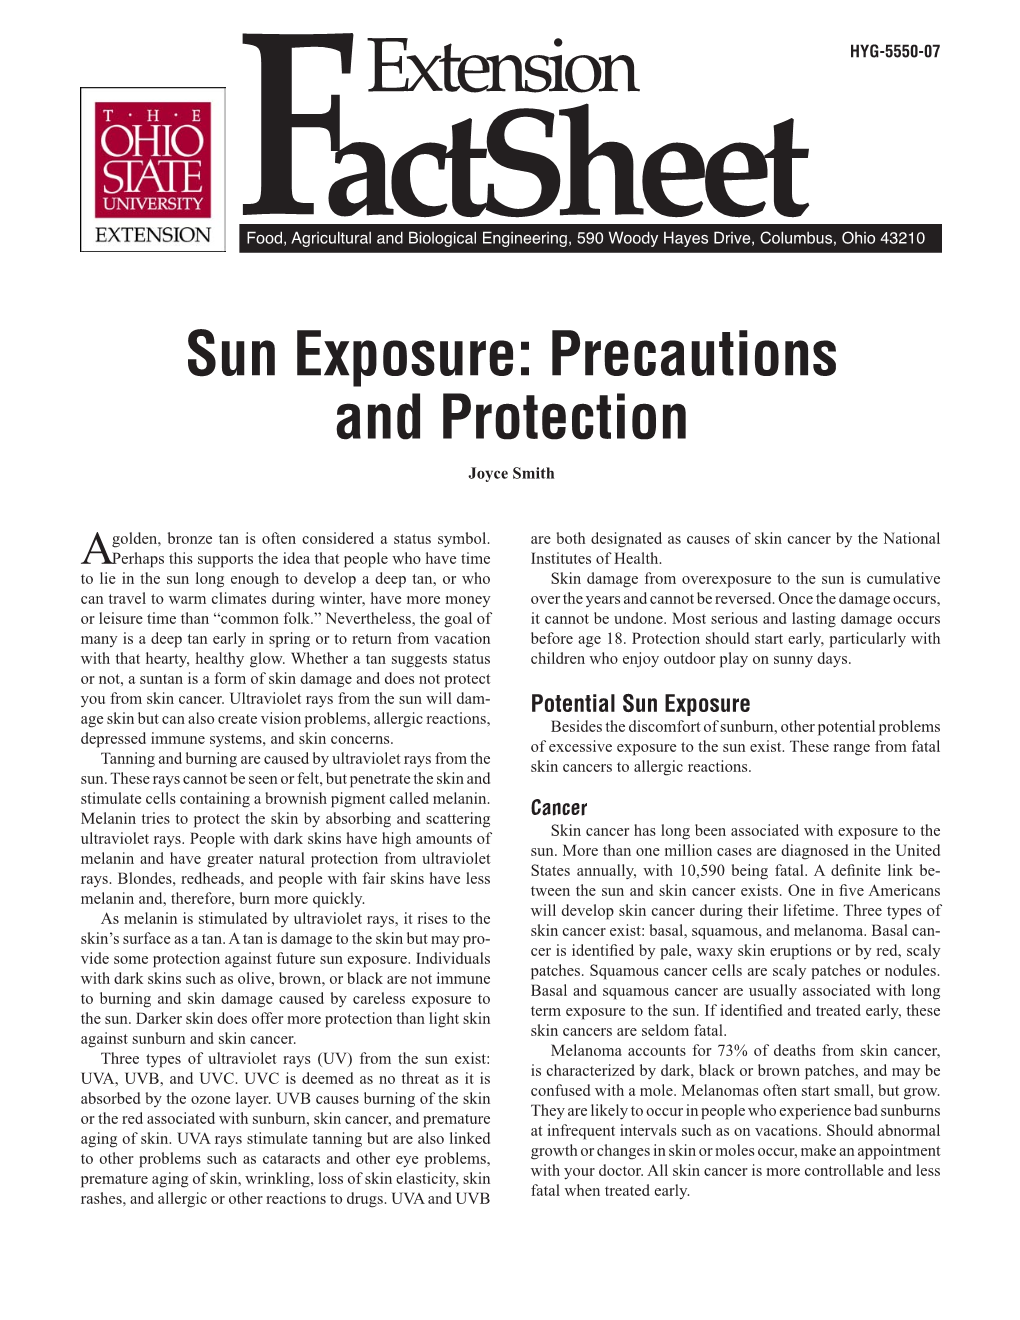 Sun Exposure: Precautions and Protection Joyce Smith